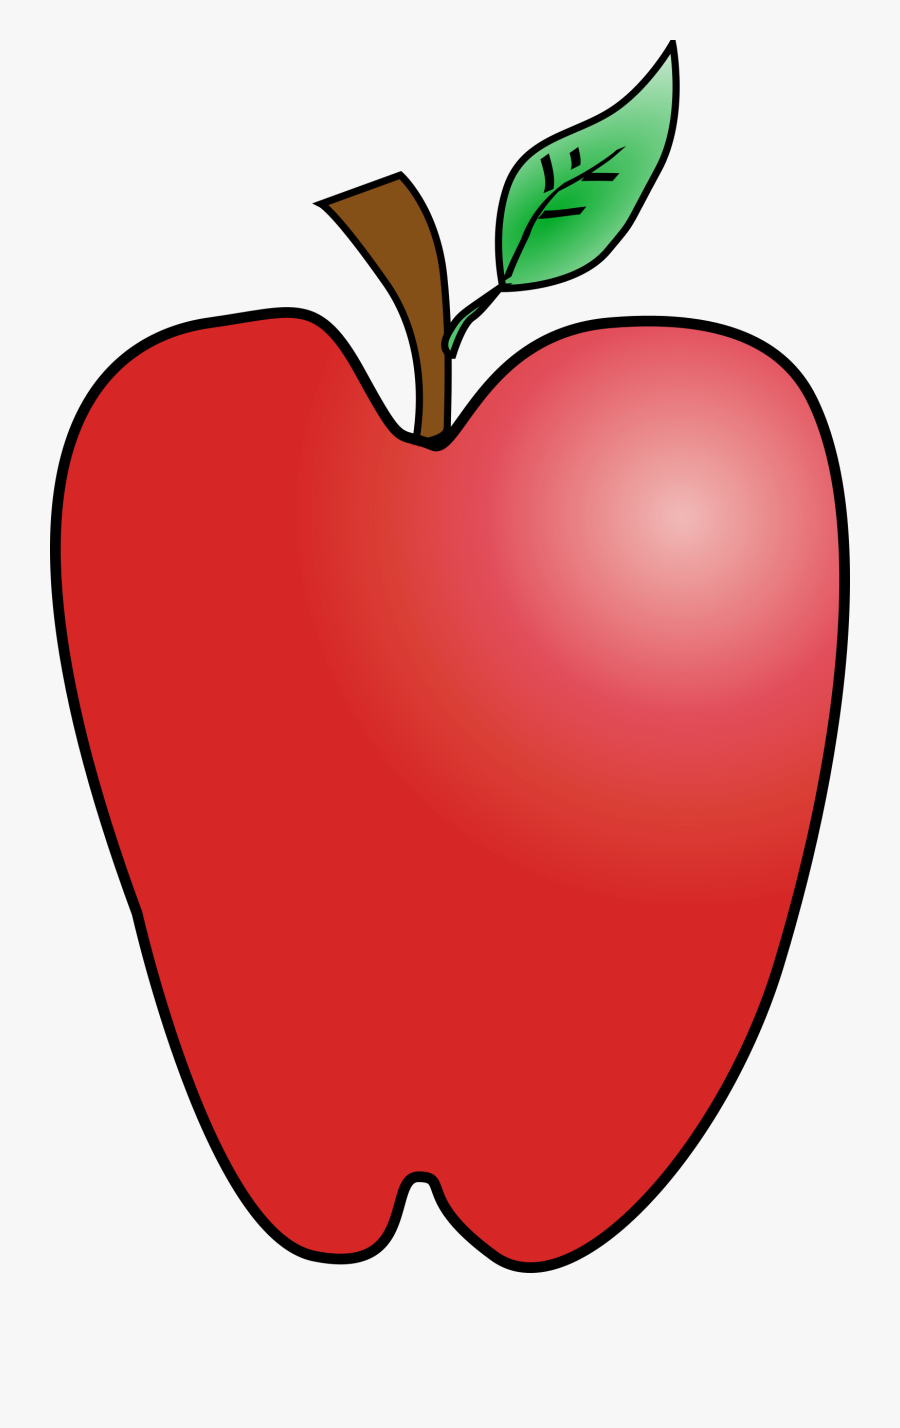 Apple On A Farm Clipart - Cartoon Apple Transparent Background, Transparent Clipart